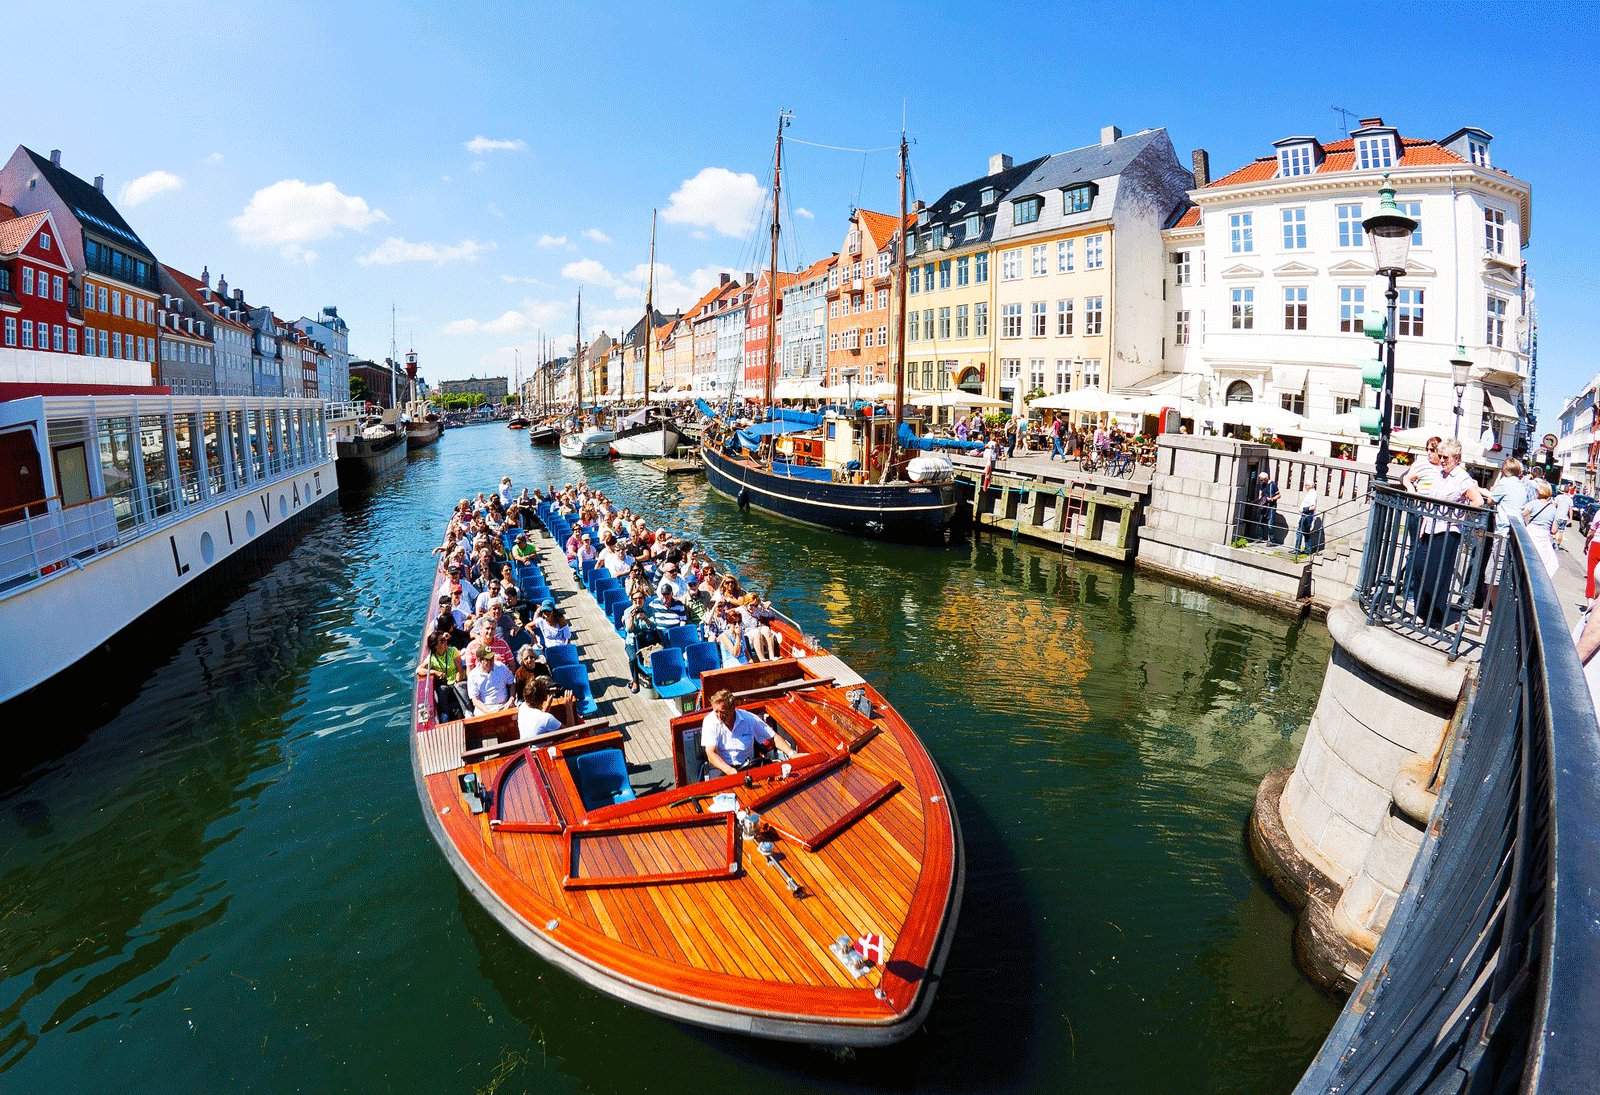 How to ride in a hop-on/hop-off boat in Copenhagen